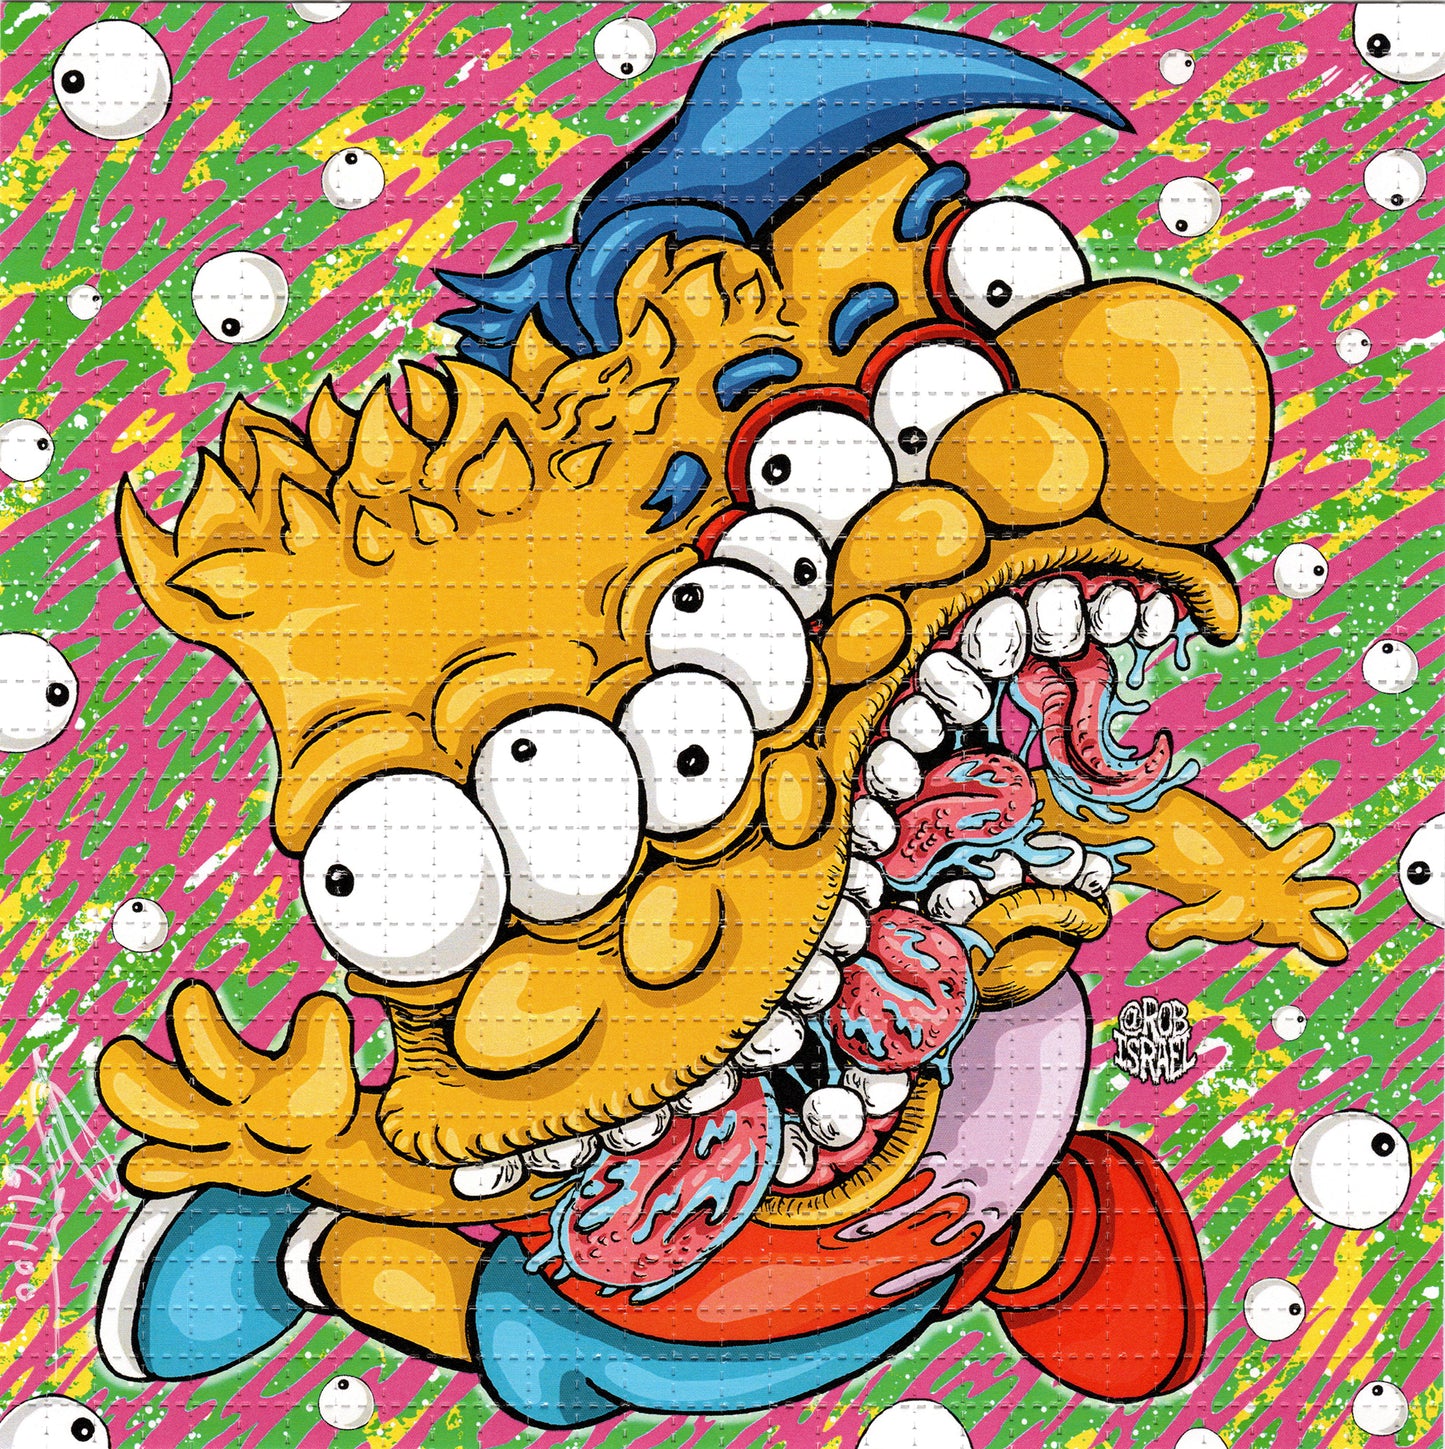 Bart-Millhouse Melt by Rob Israel SIGNED Limited Edition LSD blotter art print